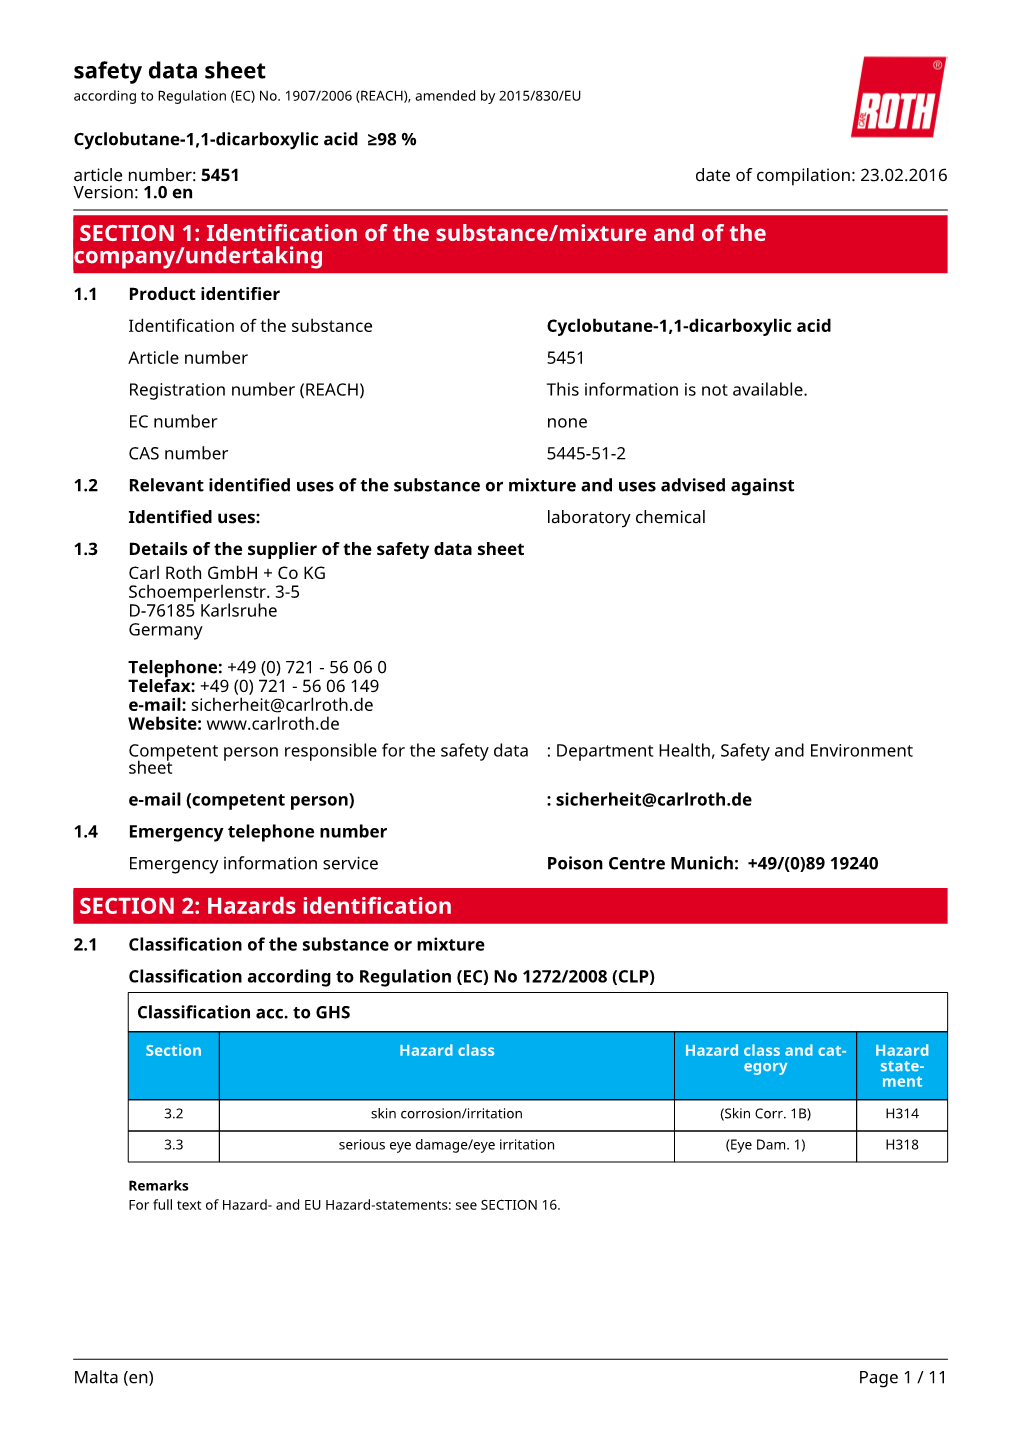 Safety Data Sheet: Cyclobutane-1,1-Dicarboxylic Acid